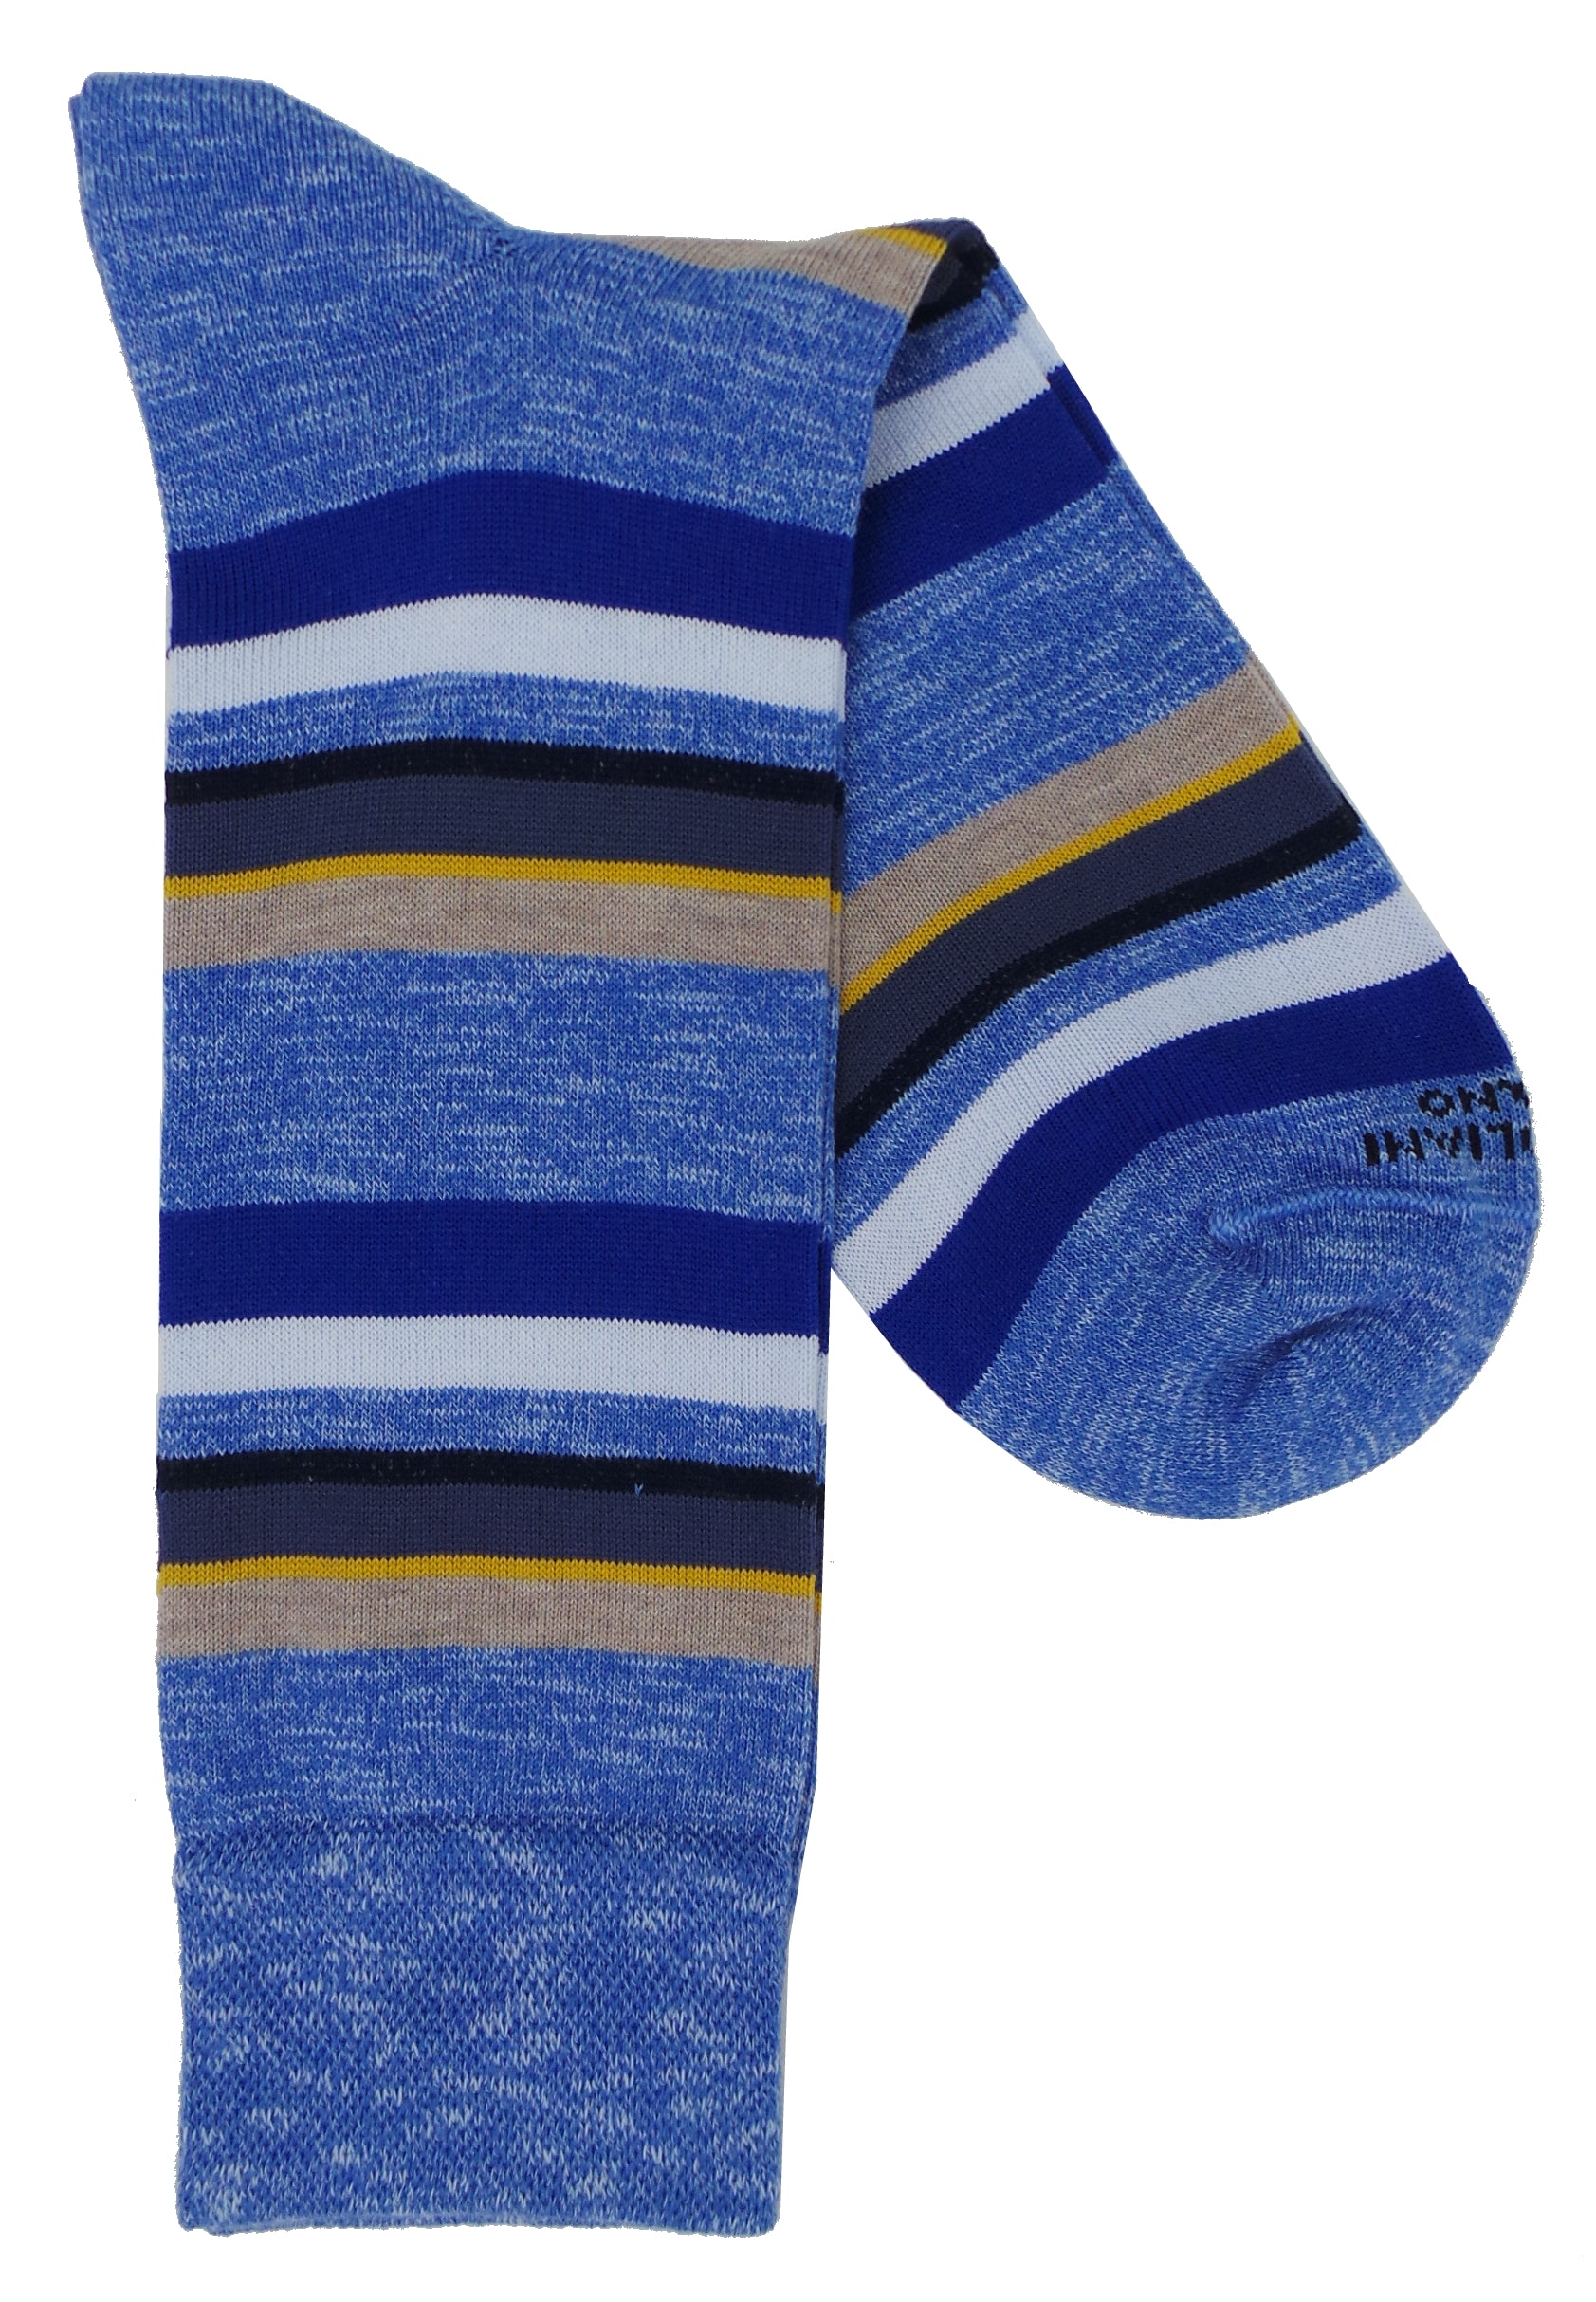 Marcoliani 4522 Eclectic Stripe Cotton Blend Socks